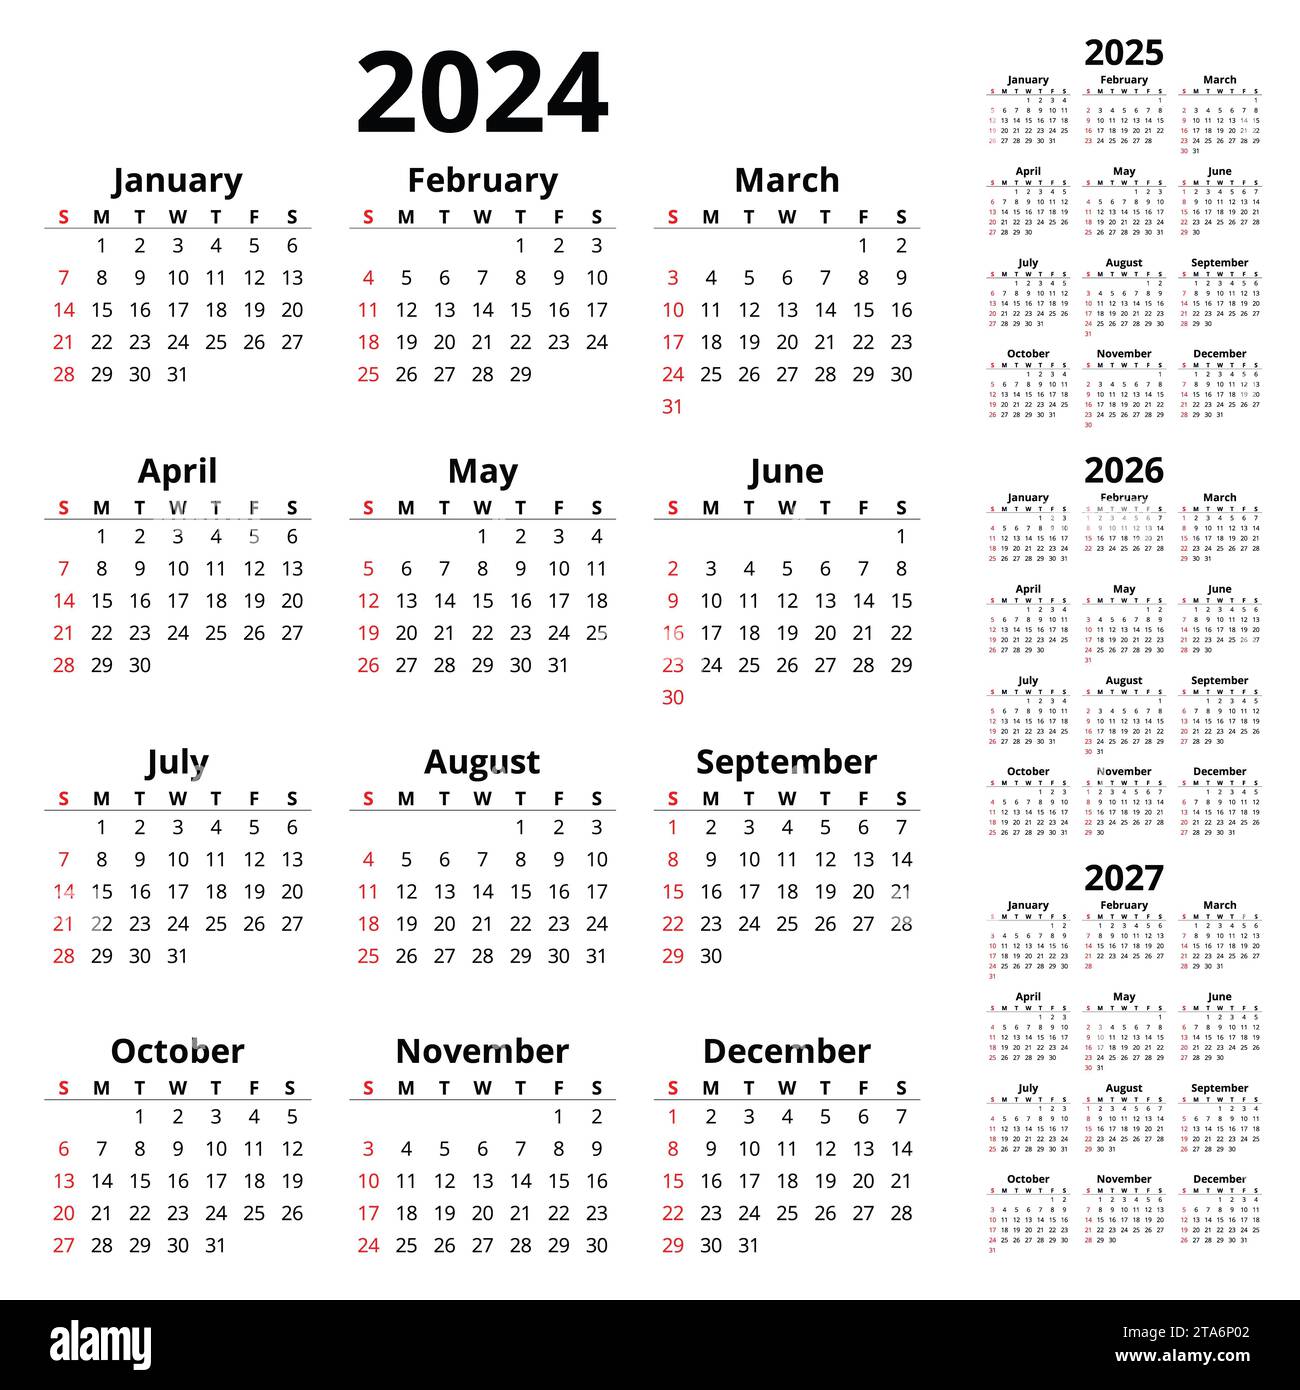 Free Editable July 2025 Calendar Google Chrome allie elisabet